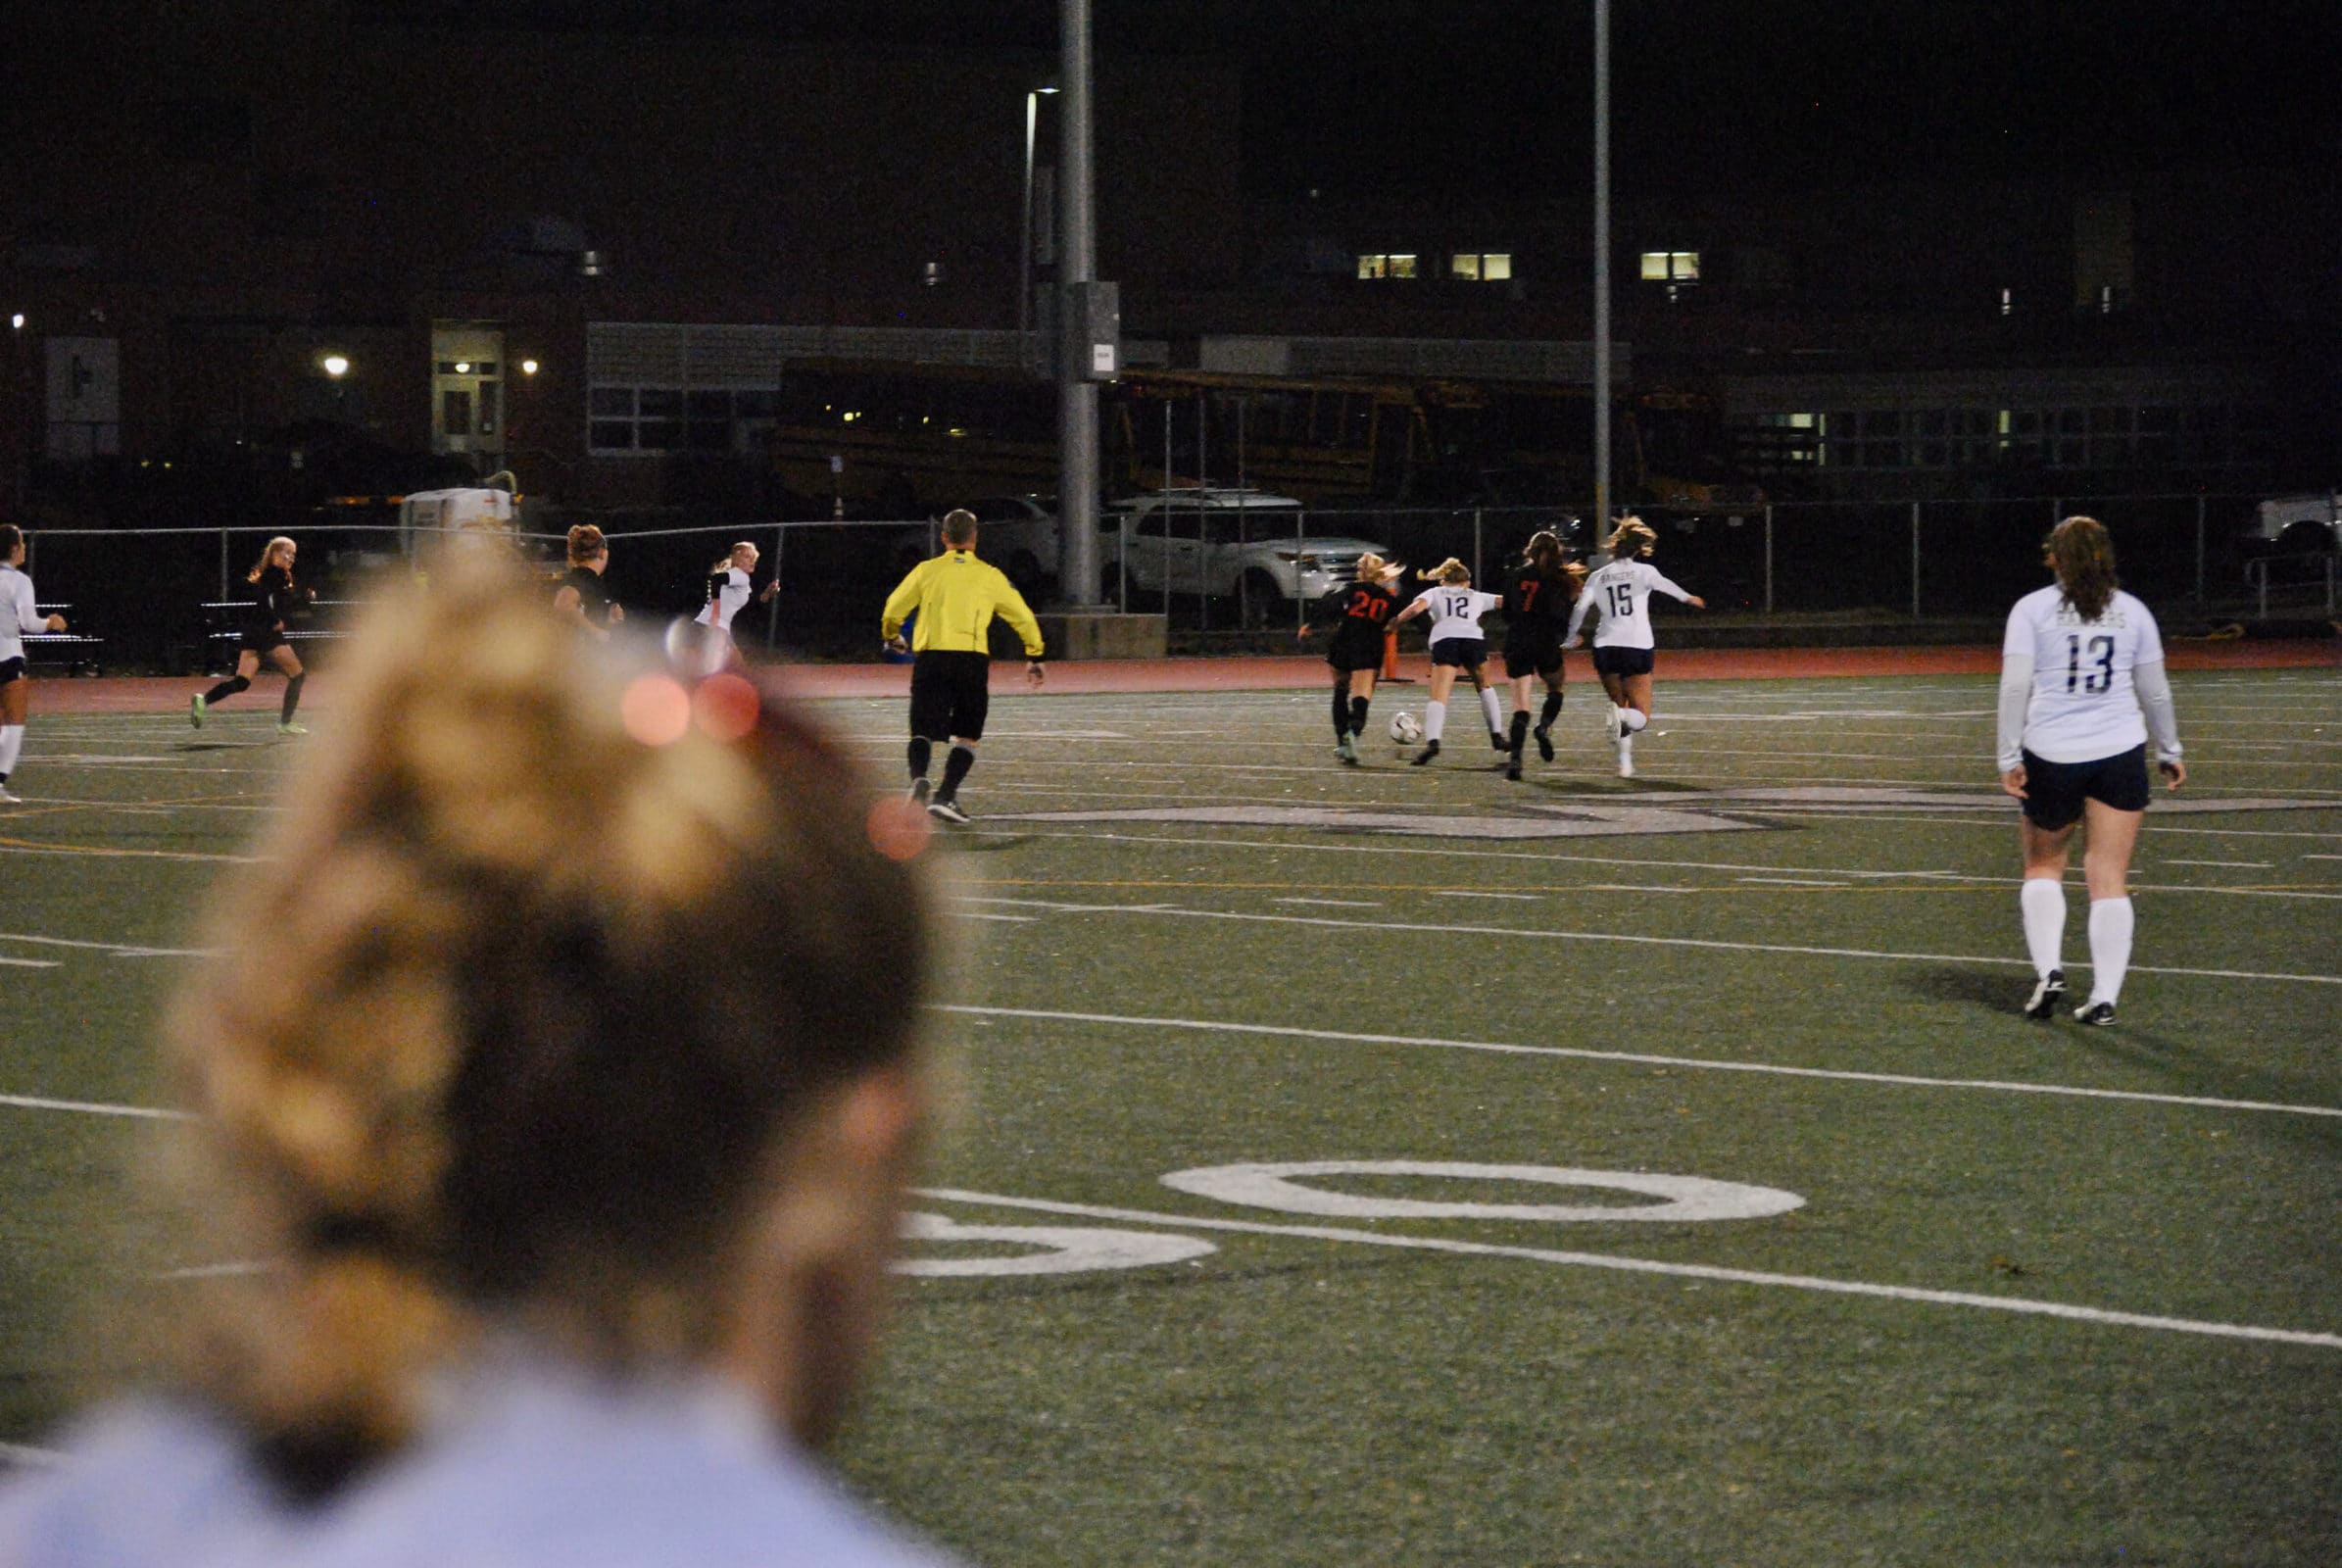 Westborough girls soccer comeback falls short in state semifinal game